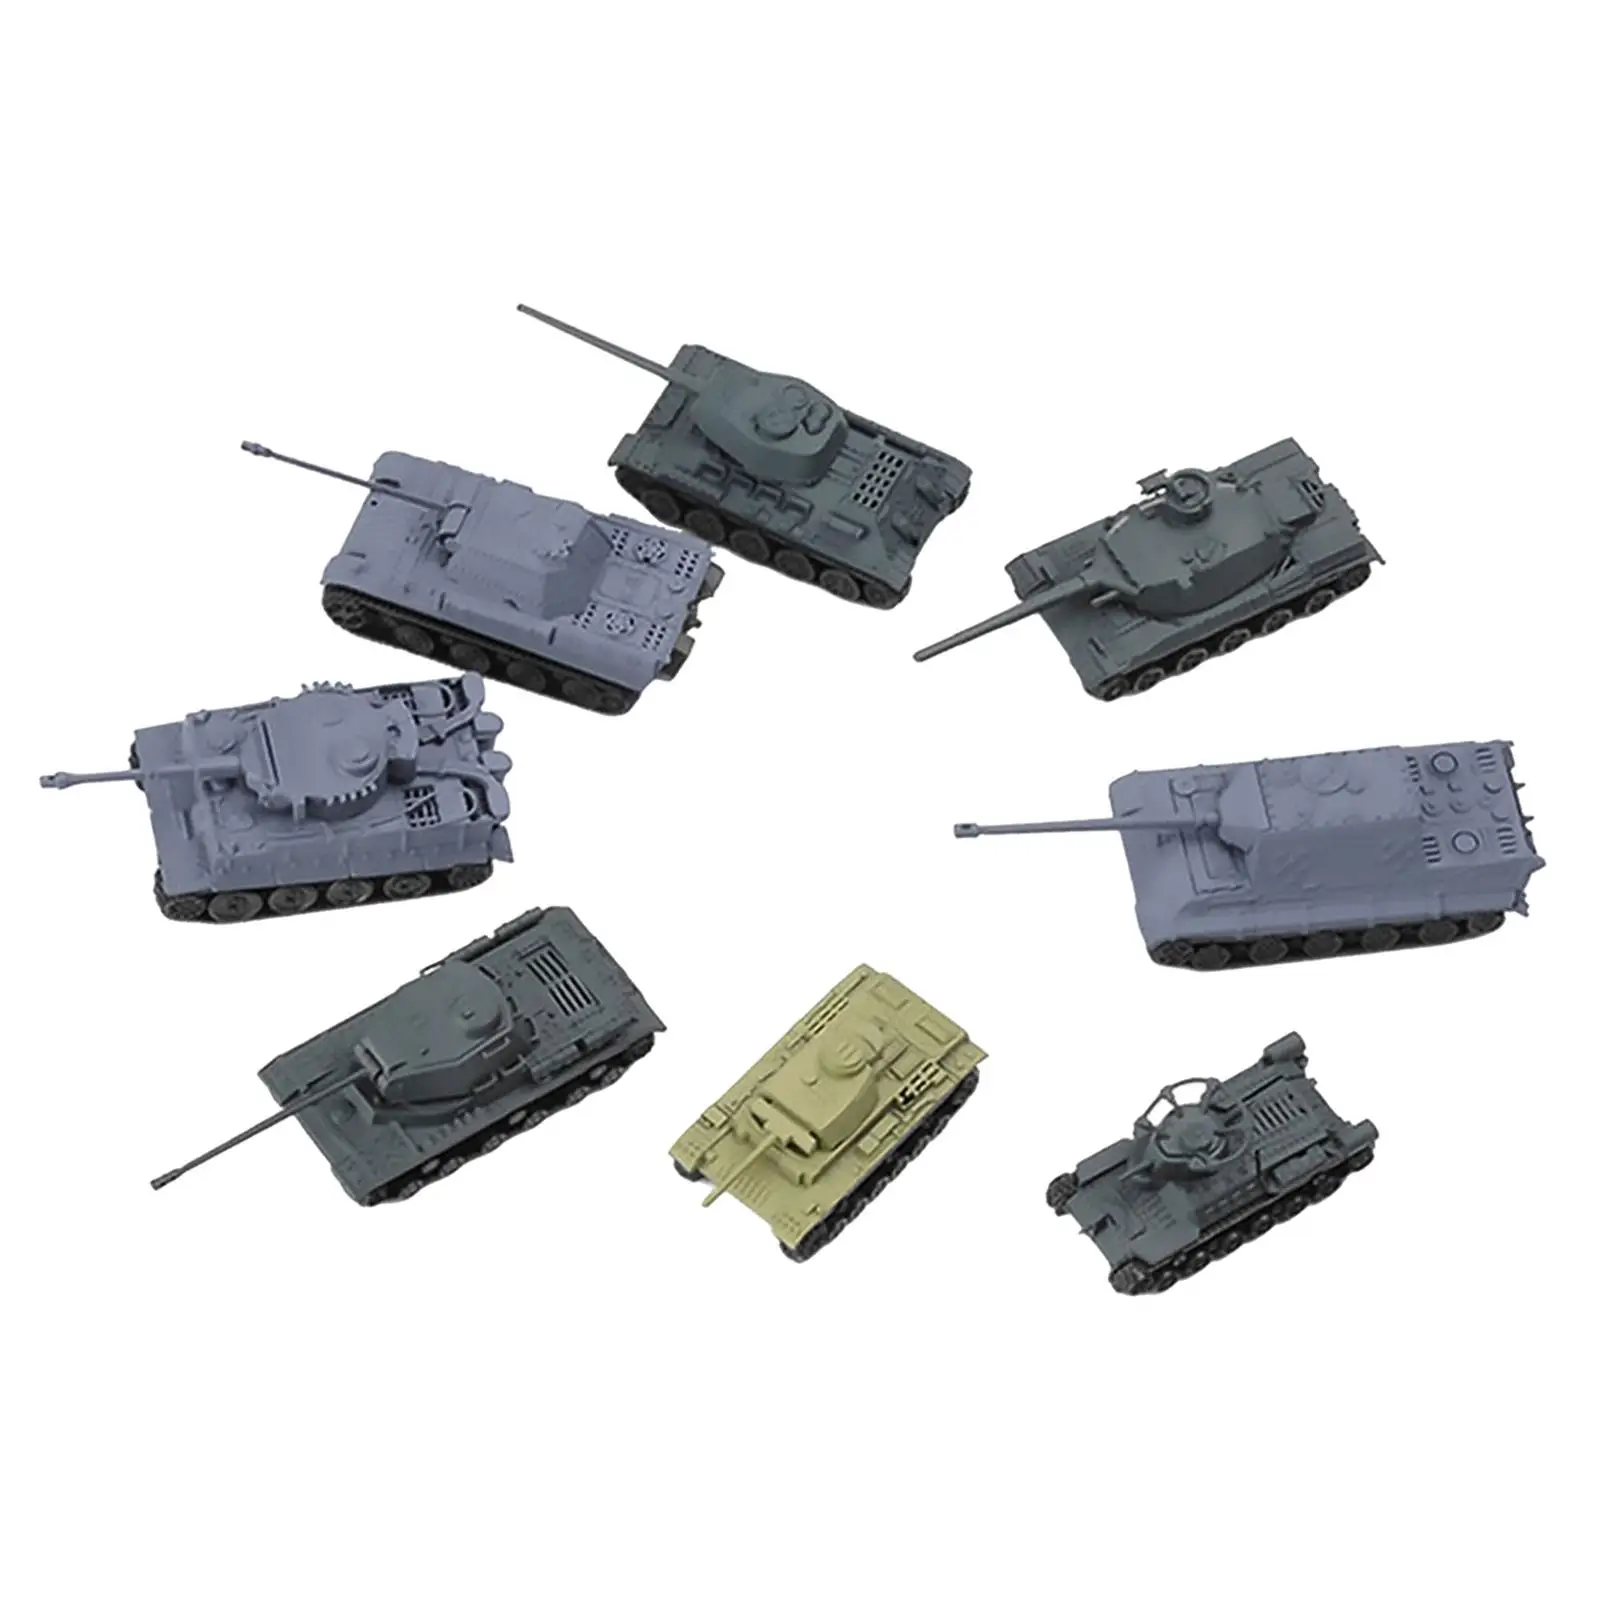 Set of 8 Plastic 1:144 Assemble Tank Kits Table DIY Model Playset Puzzle Hobby Building Army Battle Tank